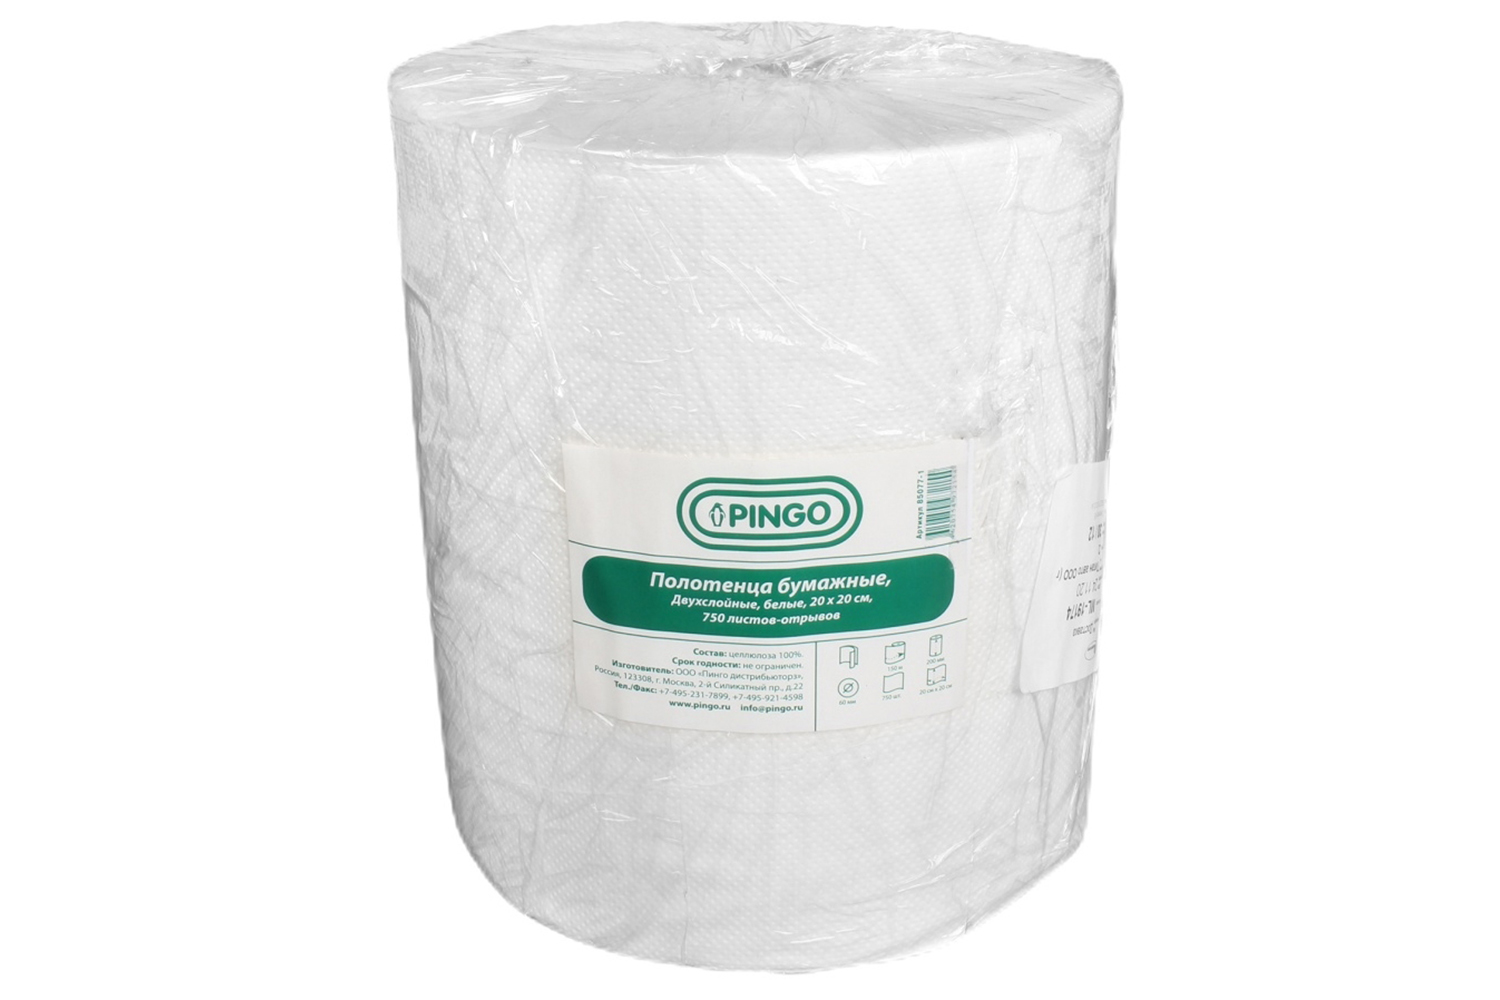 Полотенца бумажные PINGO, 2-х сл. белые, 750 отрывов 20 х 20 см